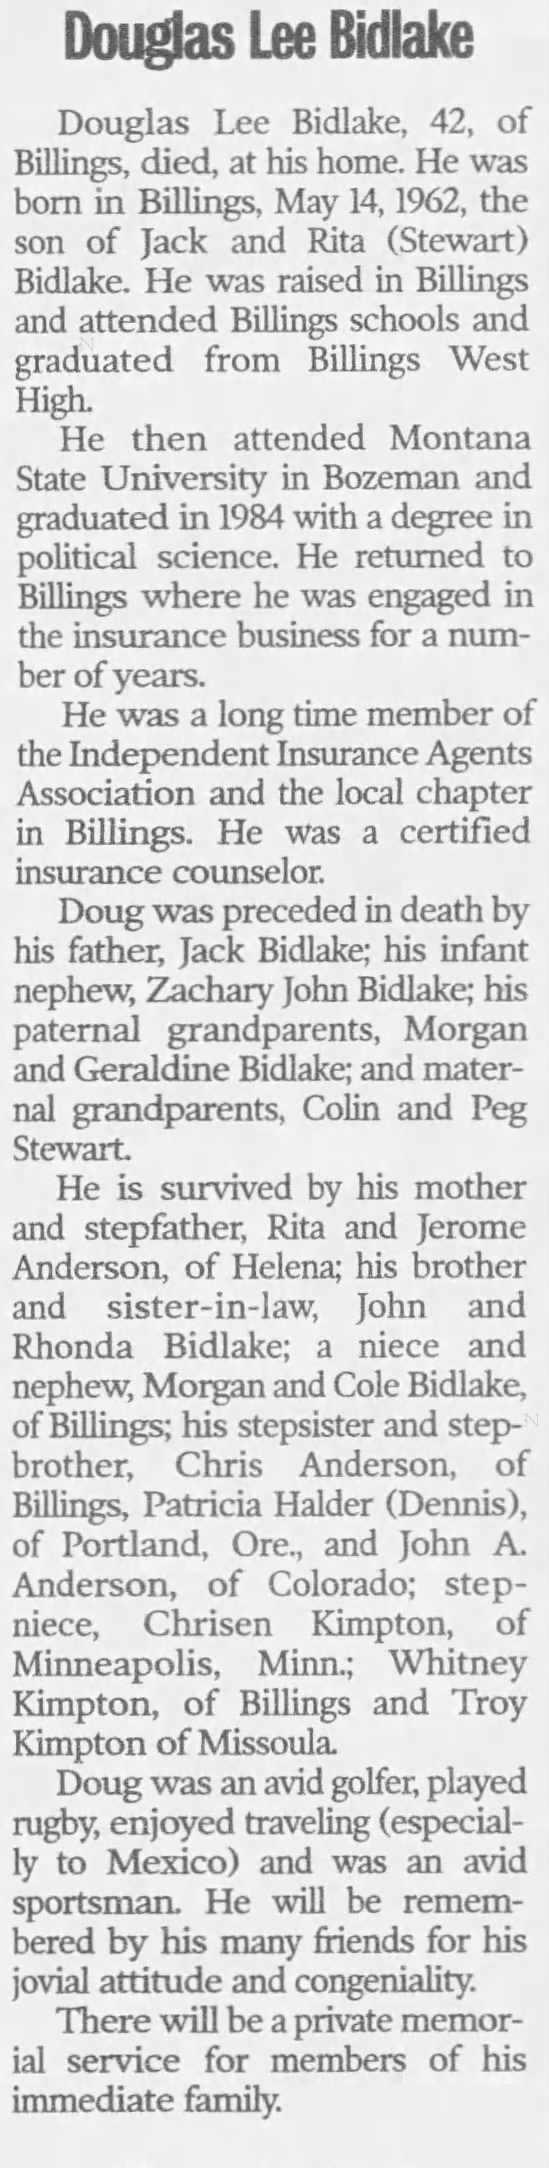 Obituary for Douglas Lee Bidlake (Aged 42)